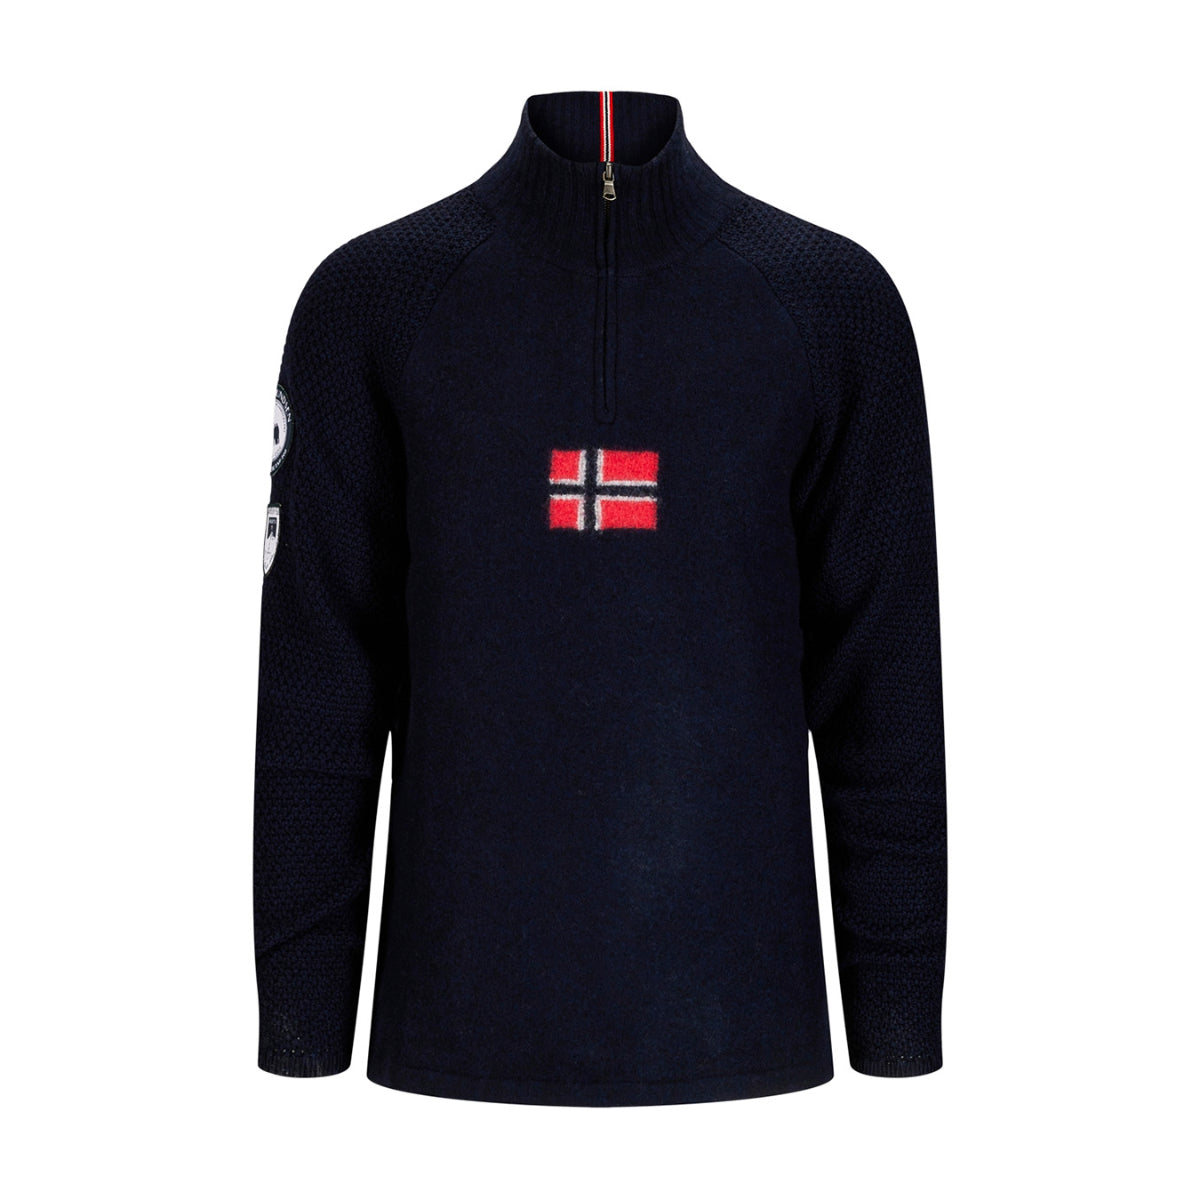 Amundsen Sports - Men's Boiled Ski Sweater (Flag) - Faded Navy / Norge